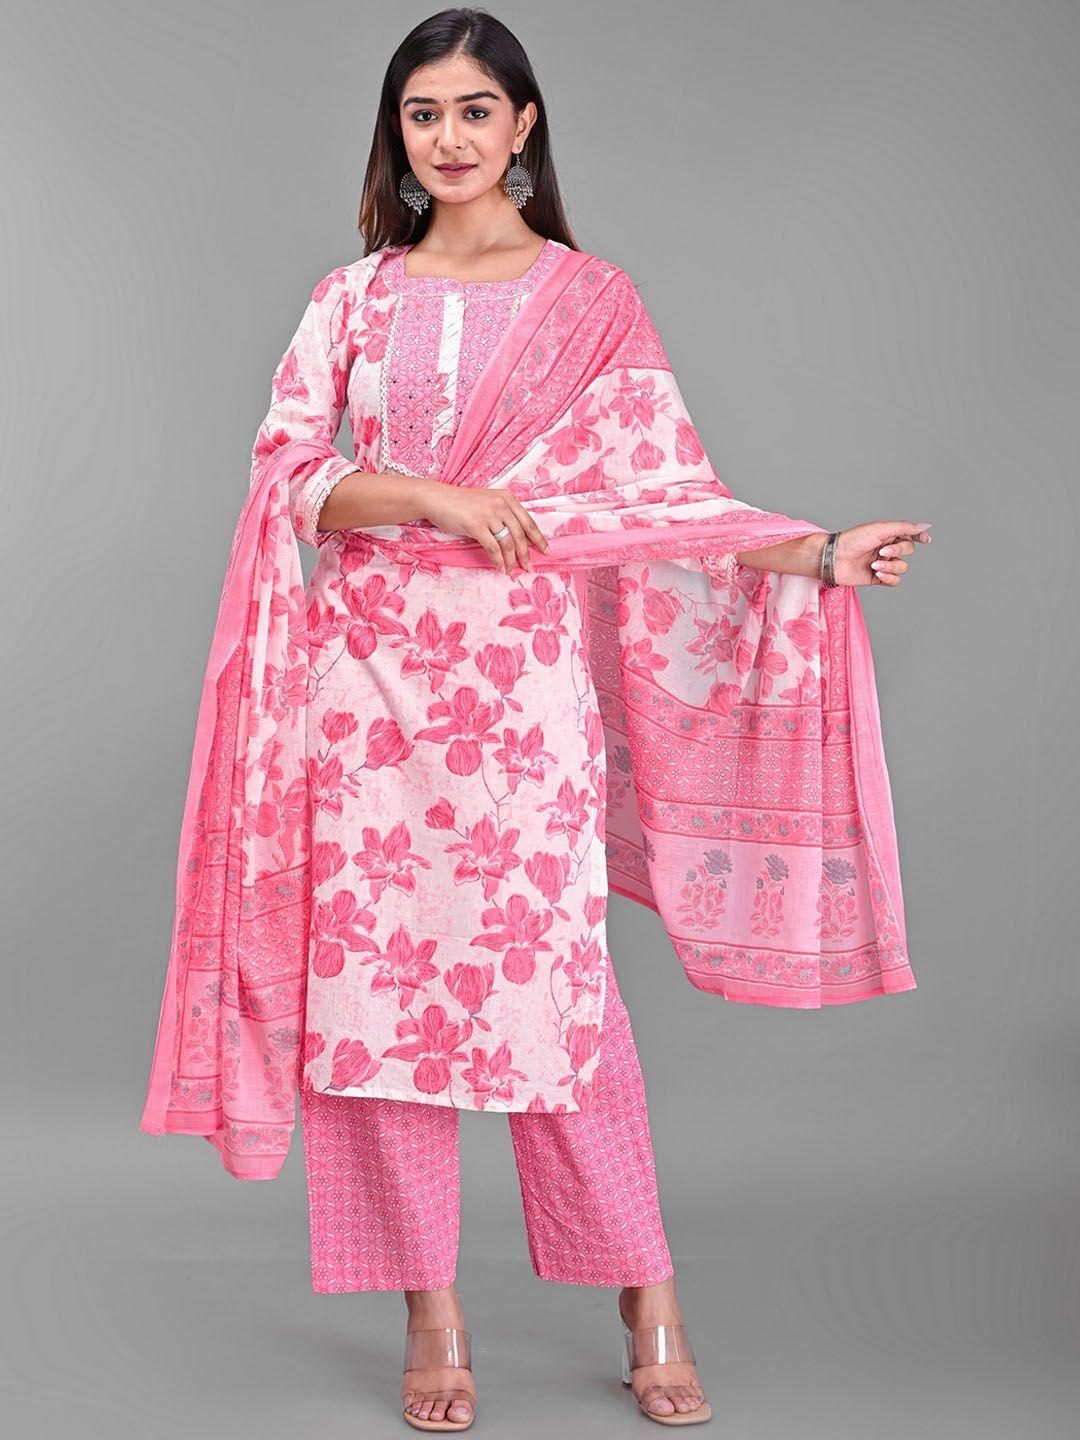 etnicawear women pink floral printed pure cotton kurta with pyjamas & with dupatta